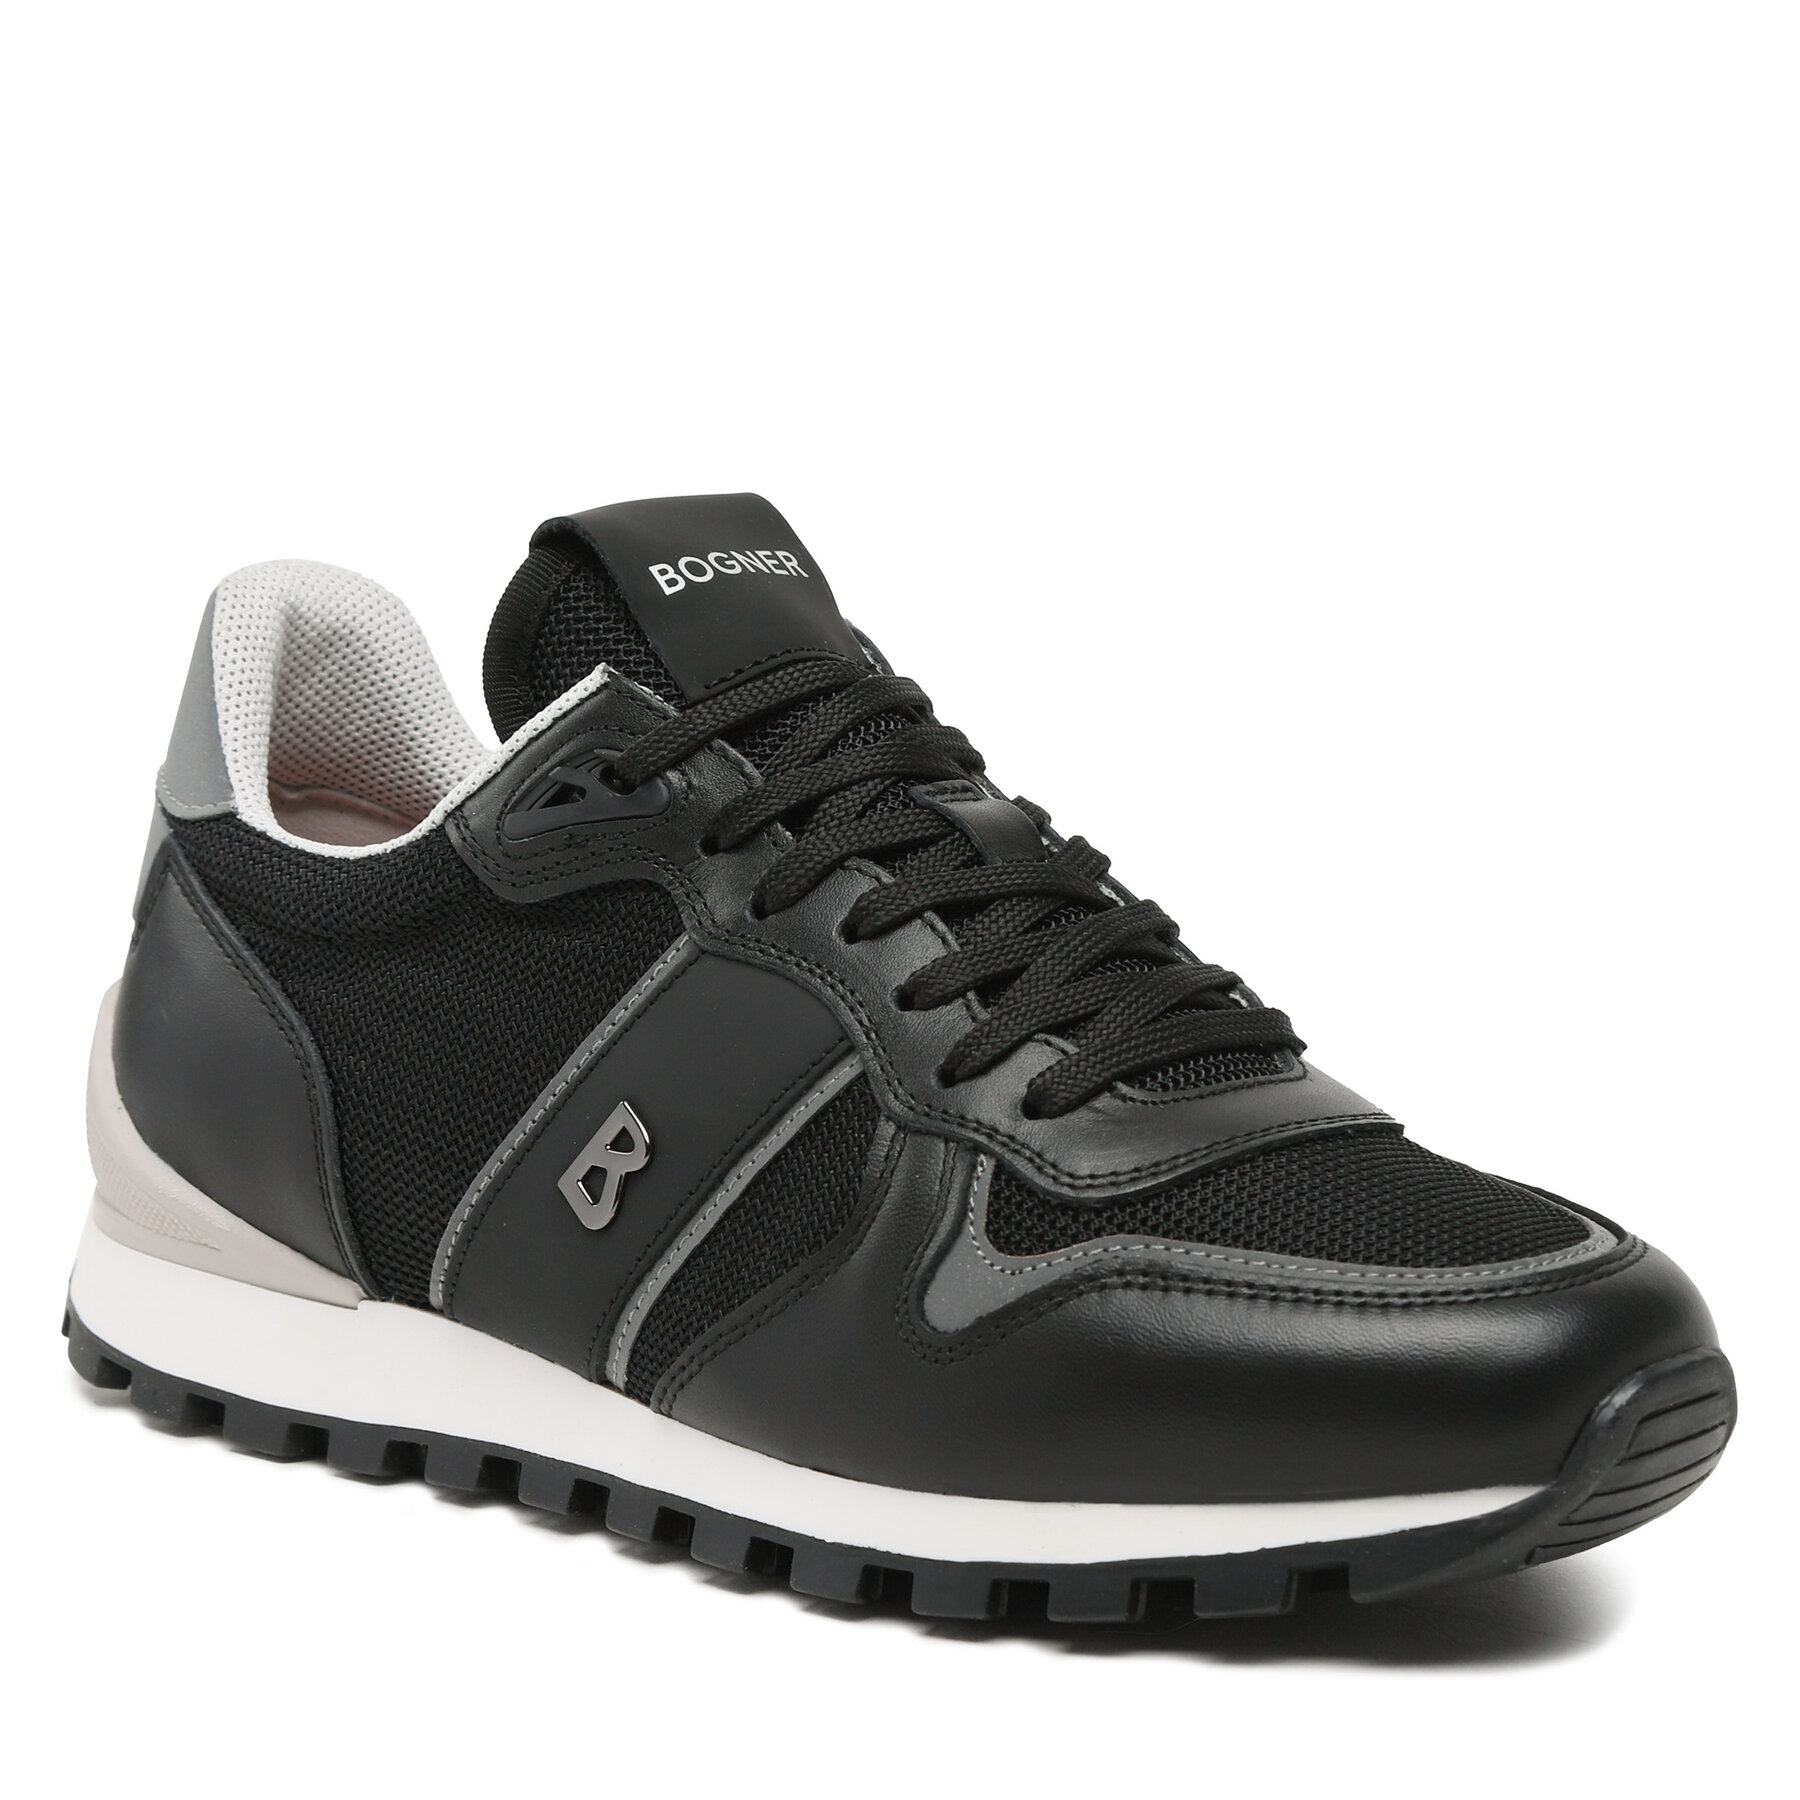 Pantofi Bogner Porto 27 B 12320135 Black 001